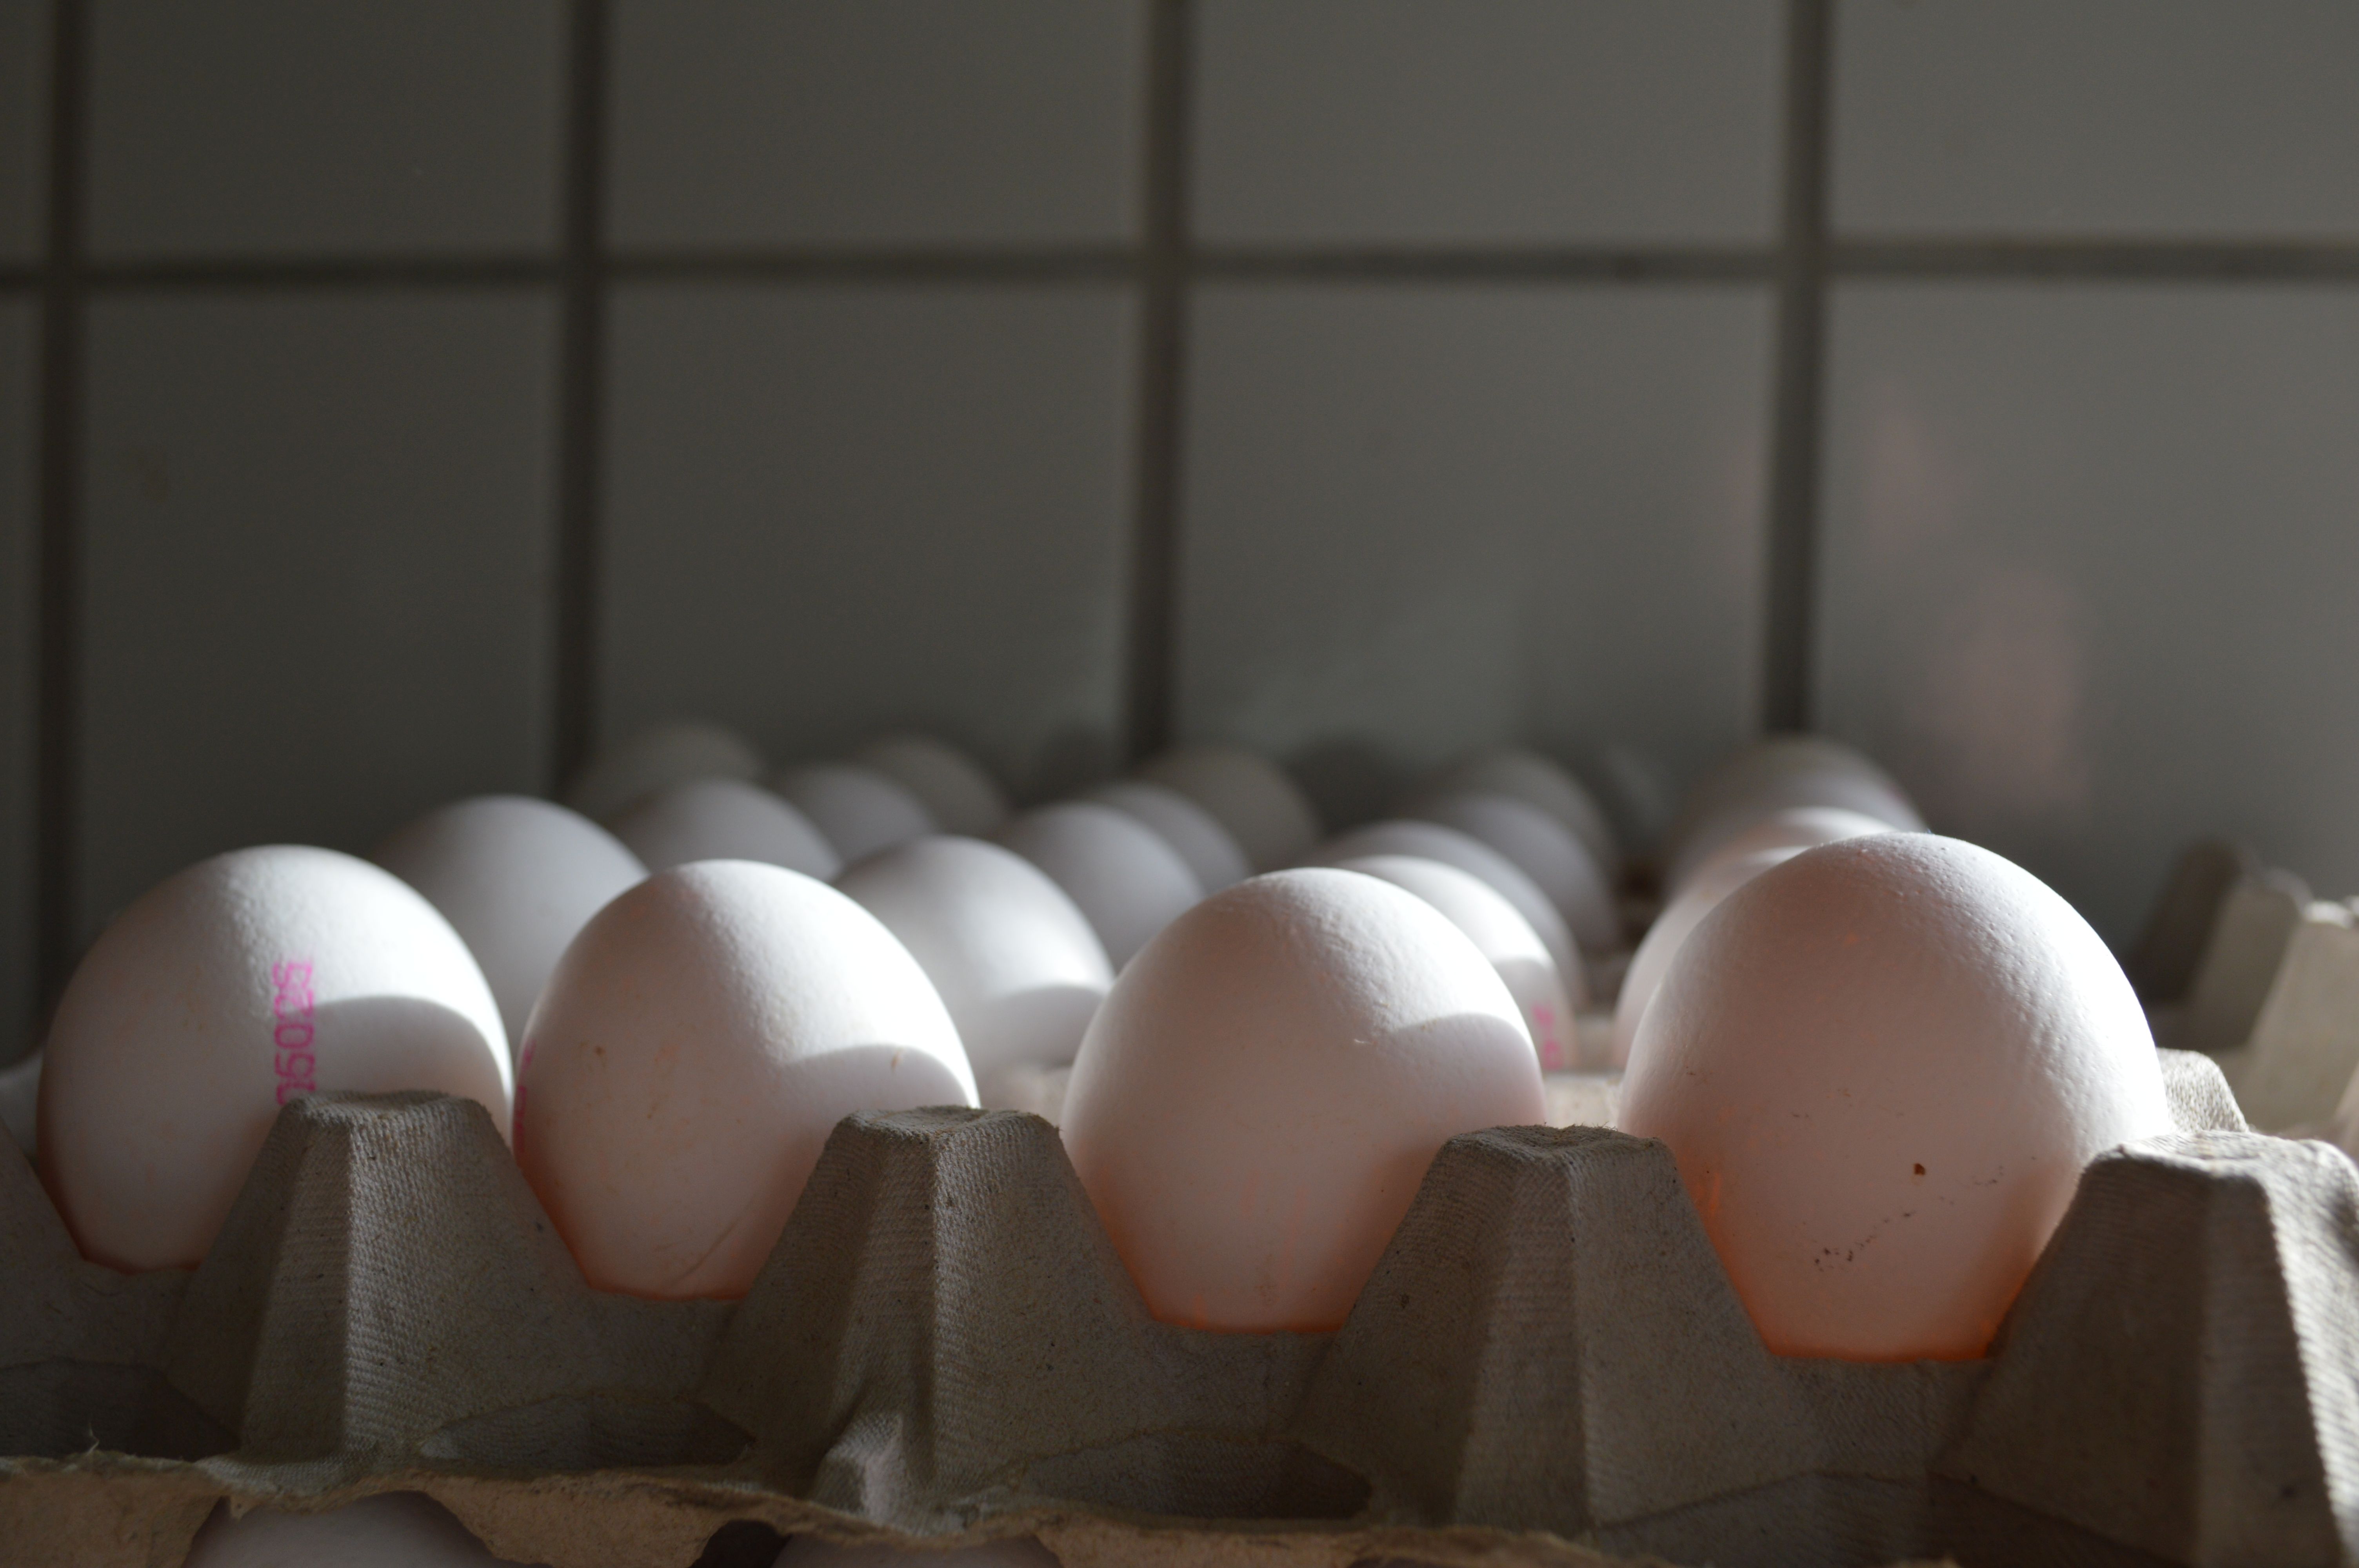 Dangerous Salmonella can reside on egg shells.